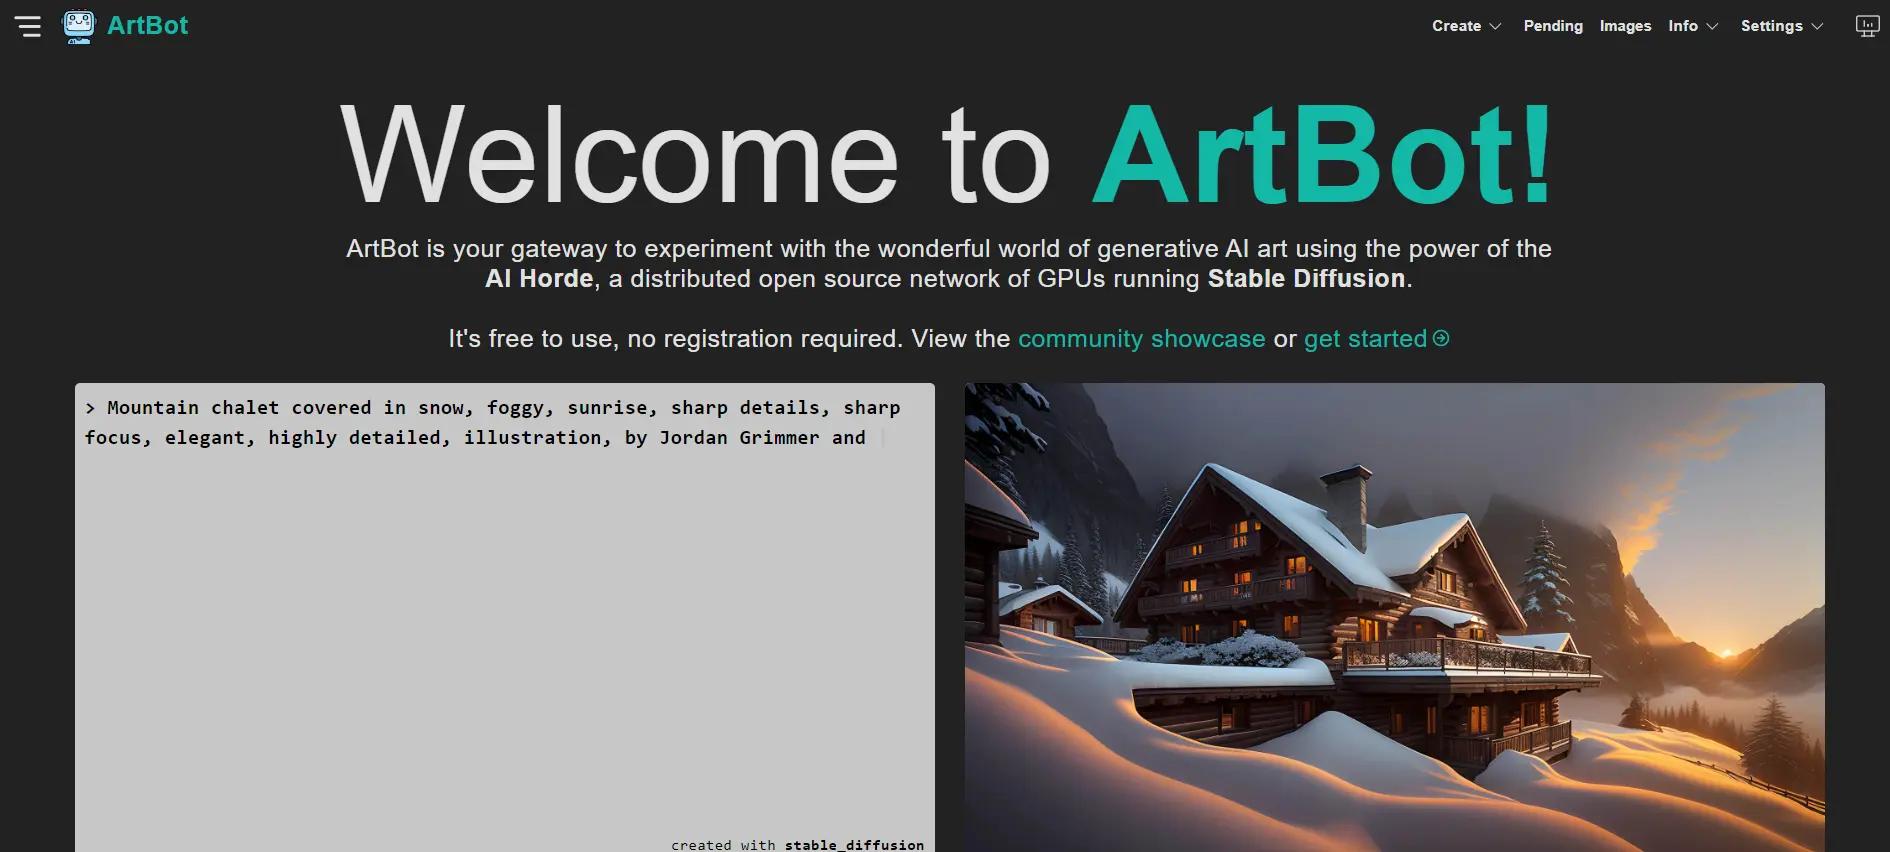 ArtBot Website